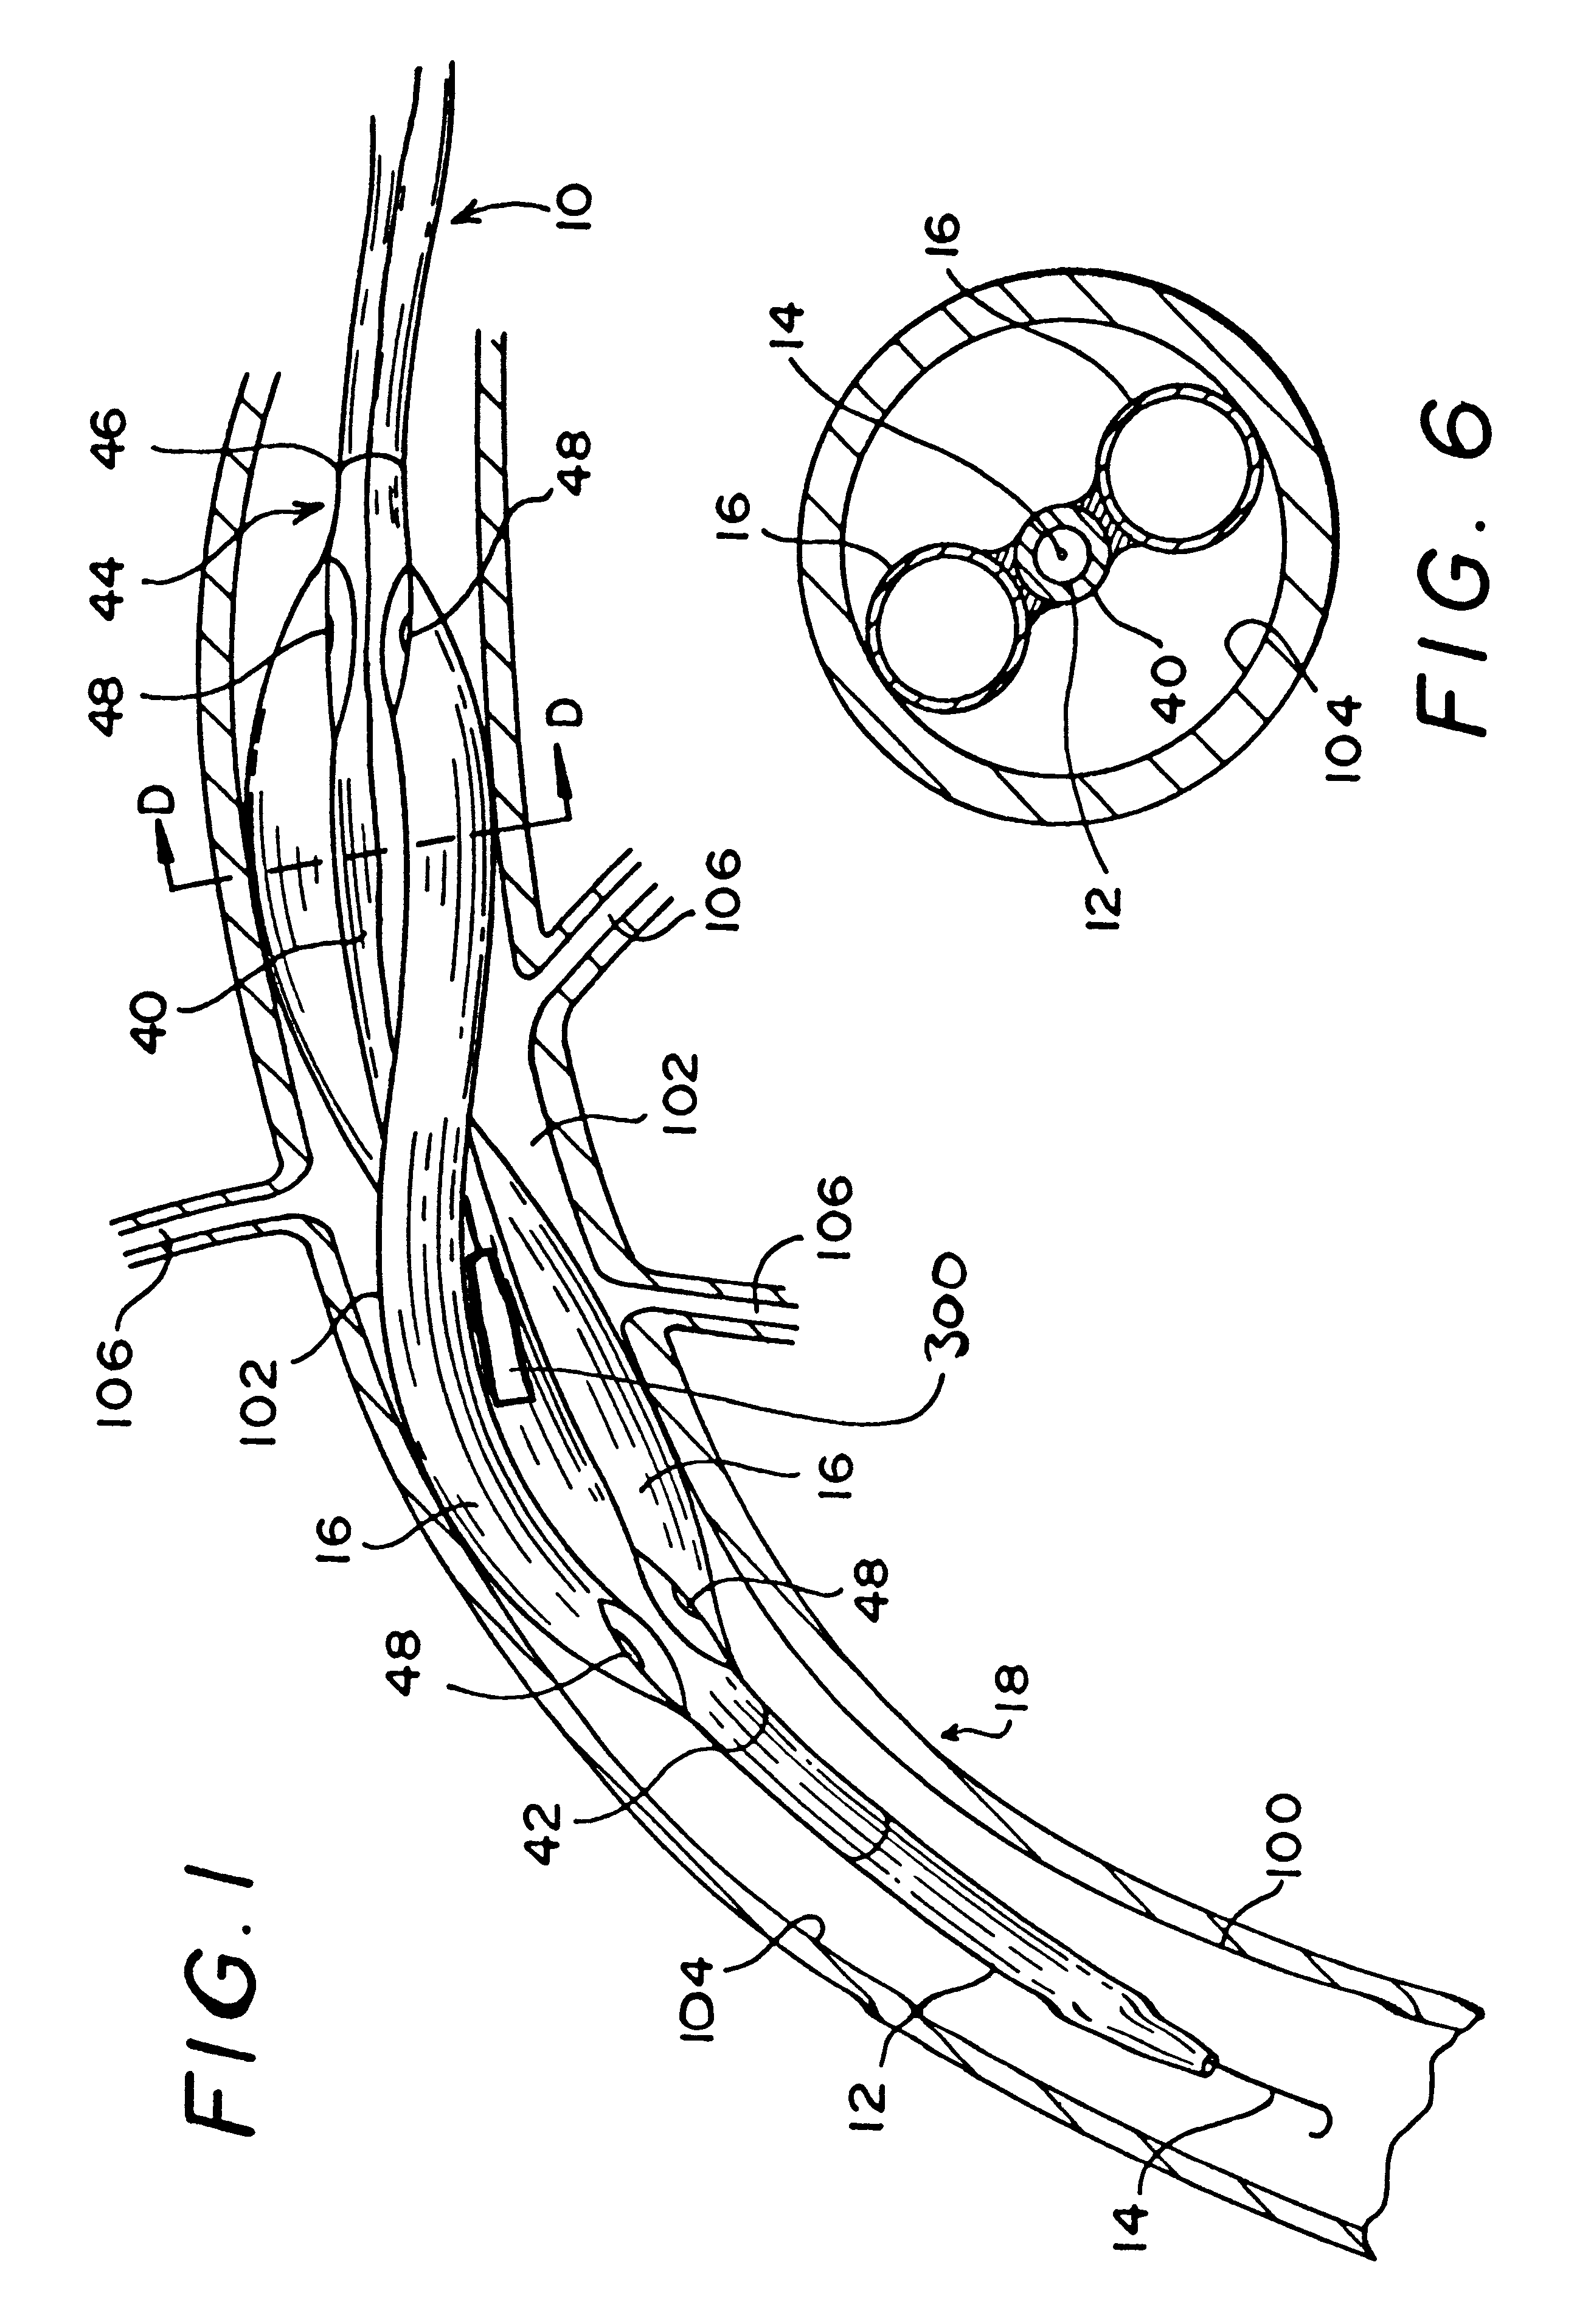 Helical spiral balloon catheter